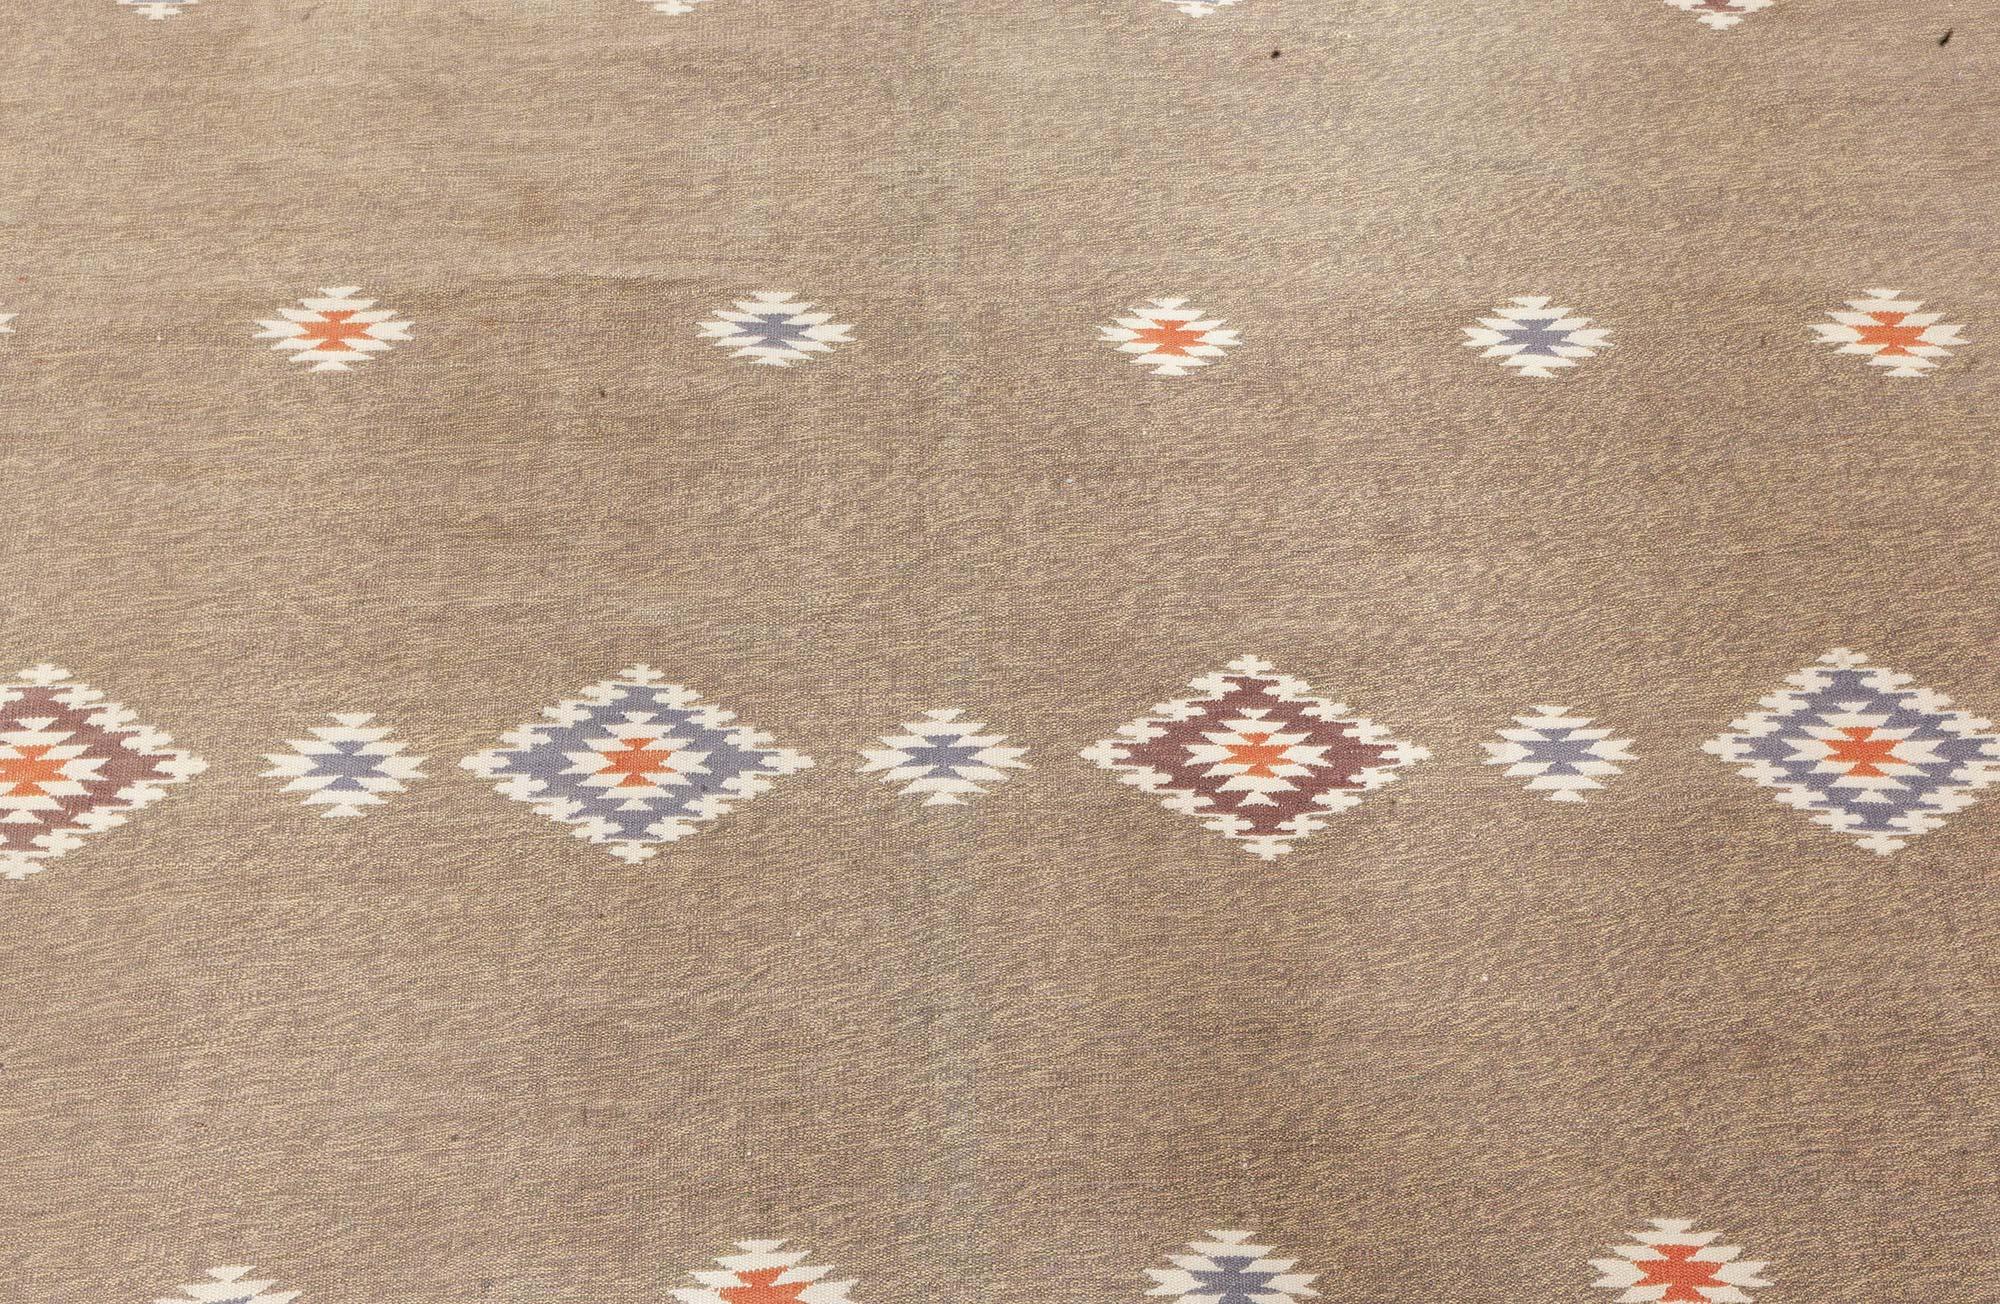 Vintage Indian Dhurrie rug
Size: 10'4